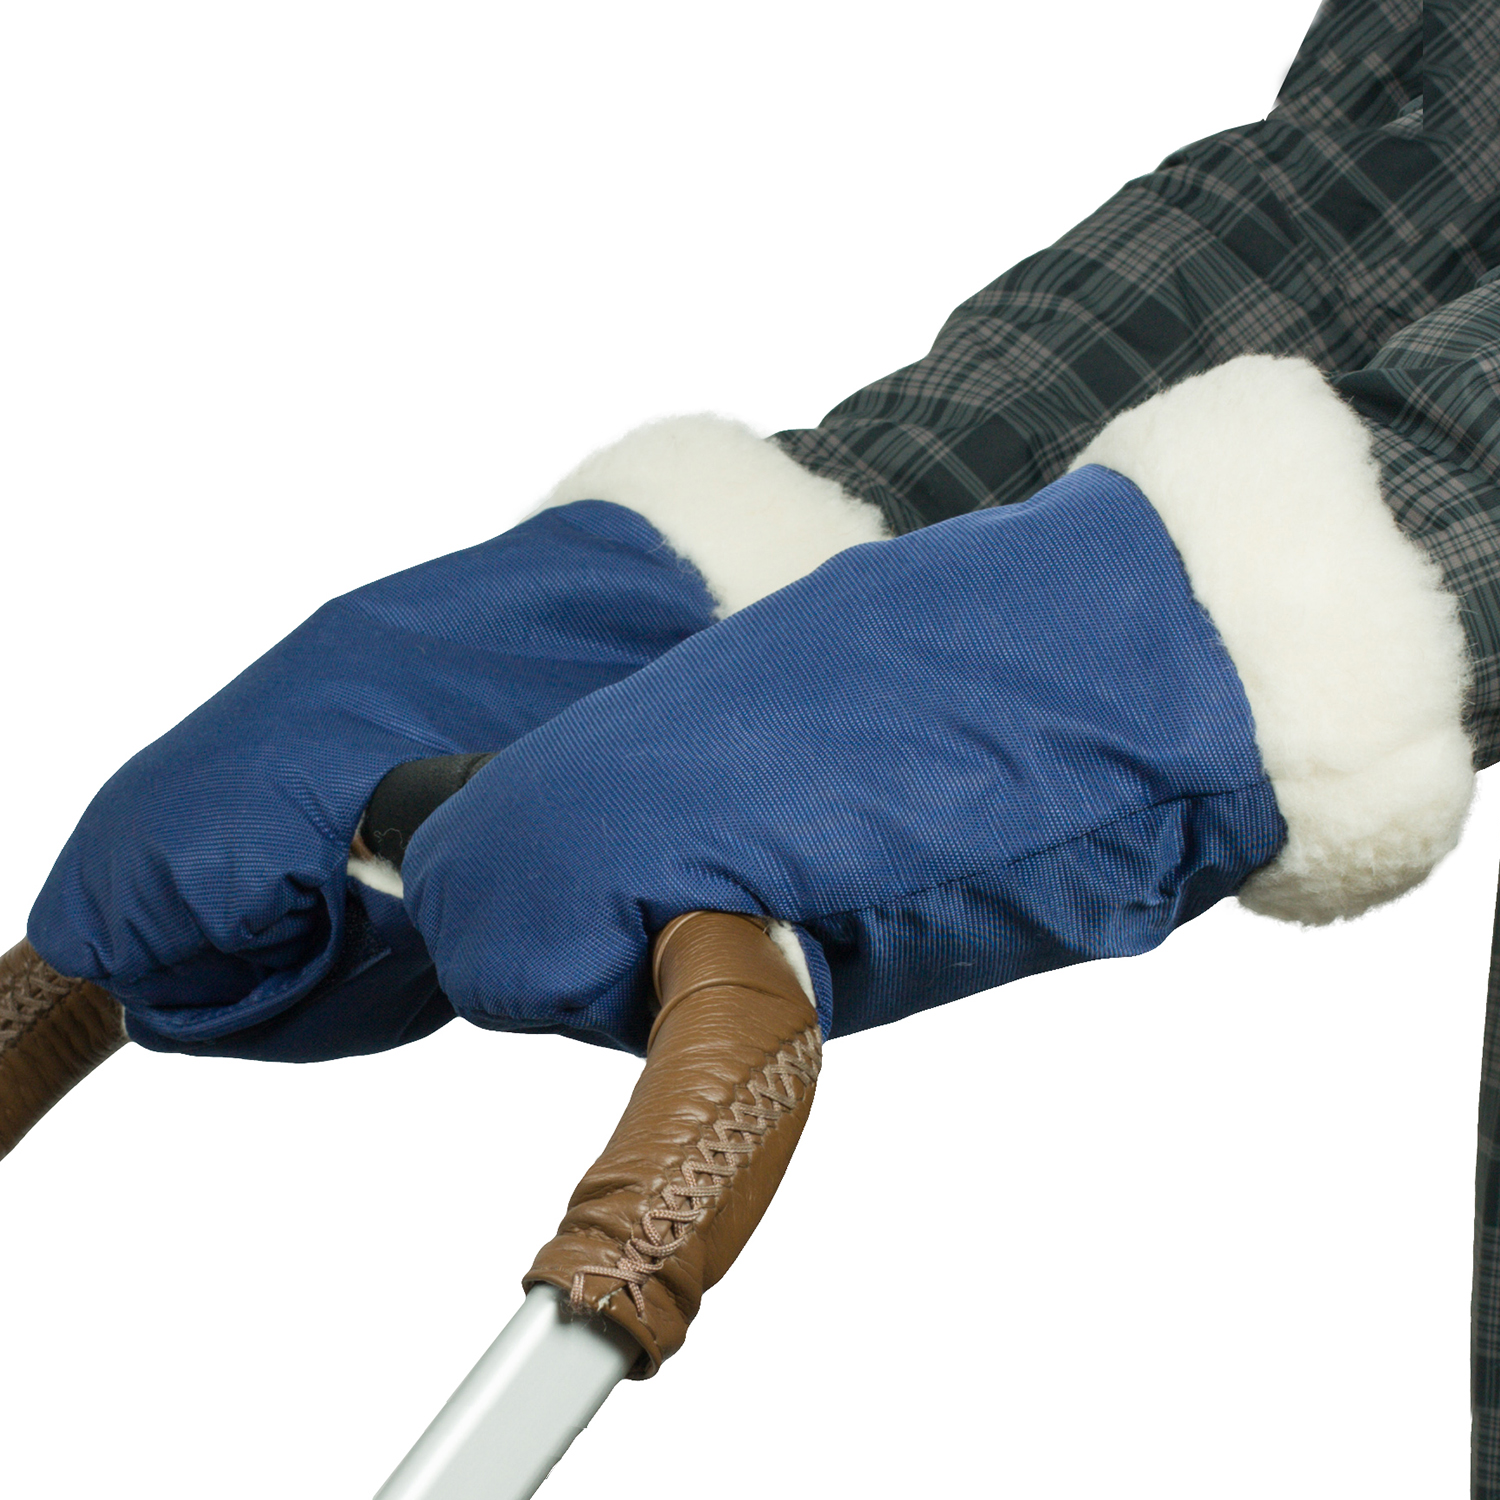 Муфта-рукавички для коляски Чудо-чадо меховая Прайм синяя МРМ03-001 - фото 5